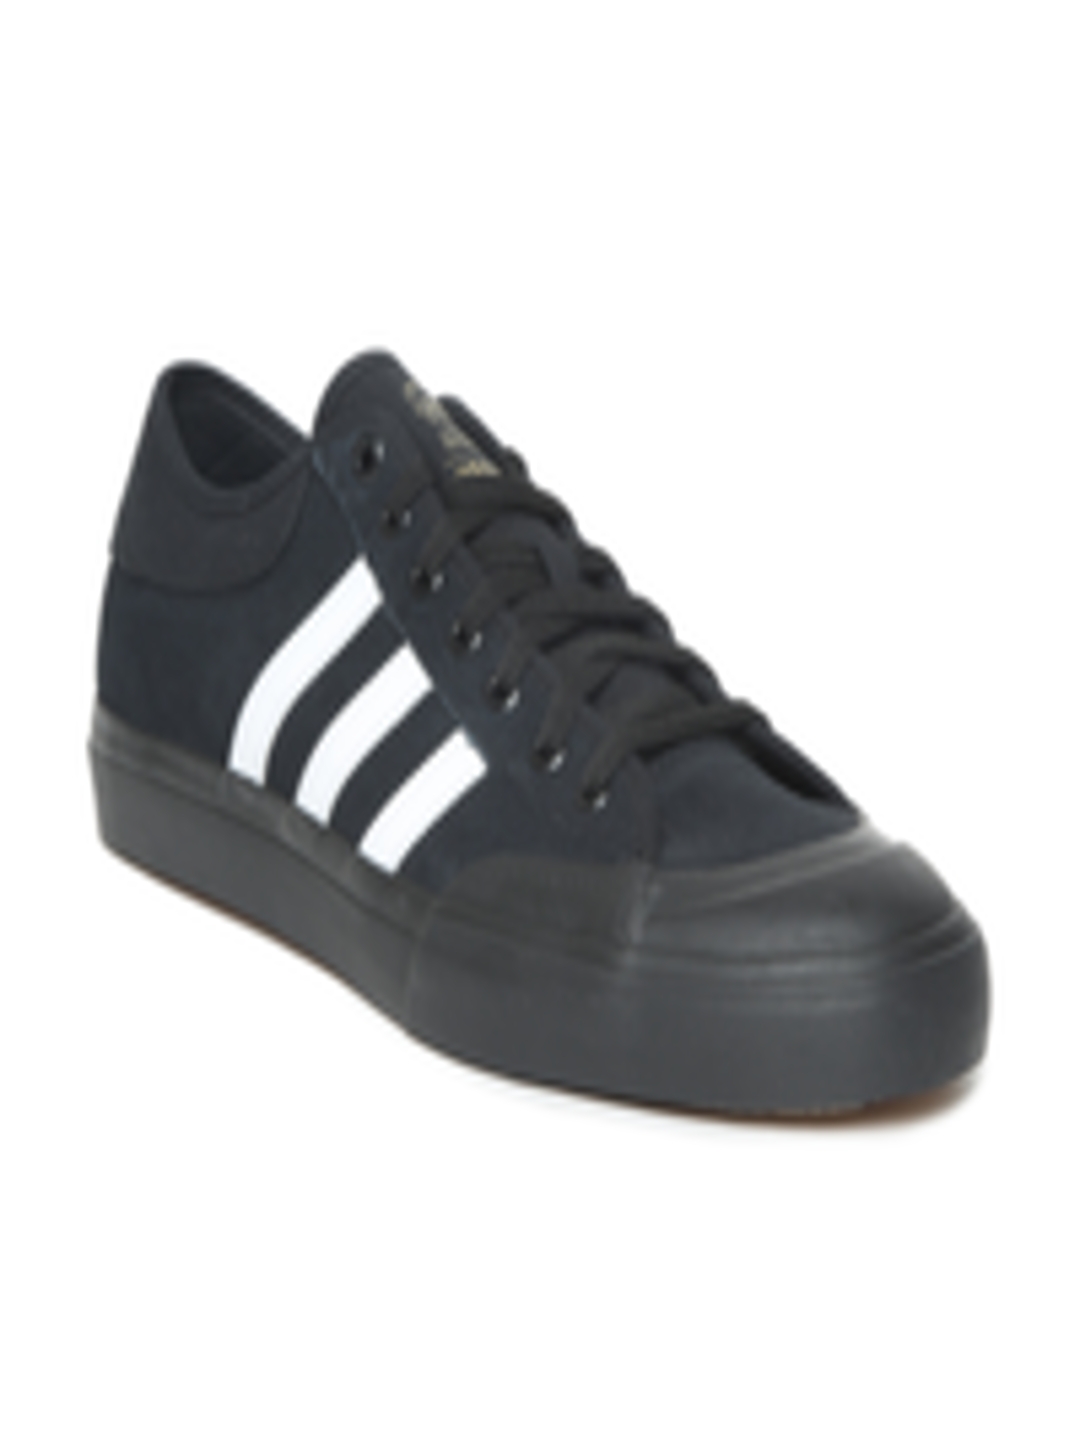 Buy ADIDAS Originals Men Black Sneakers - Casual Shoes for Men 3097973